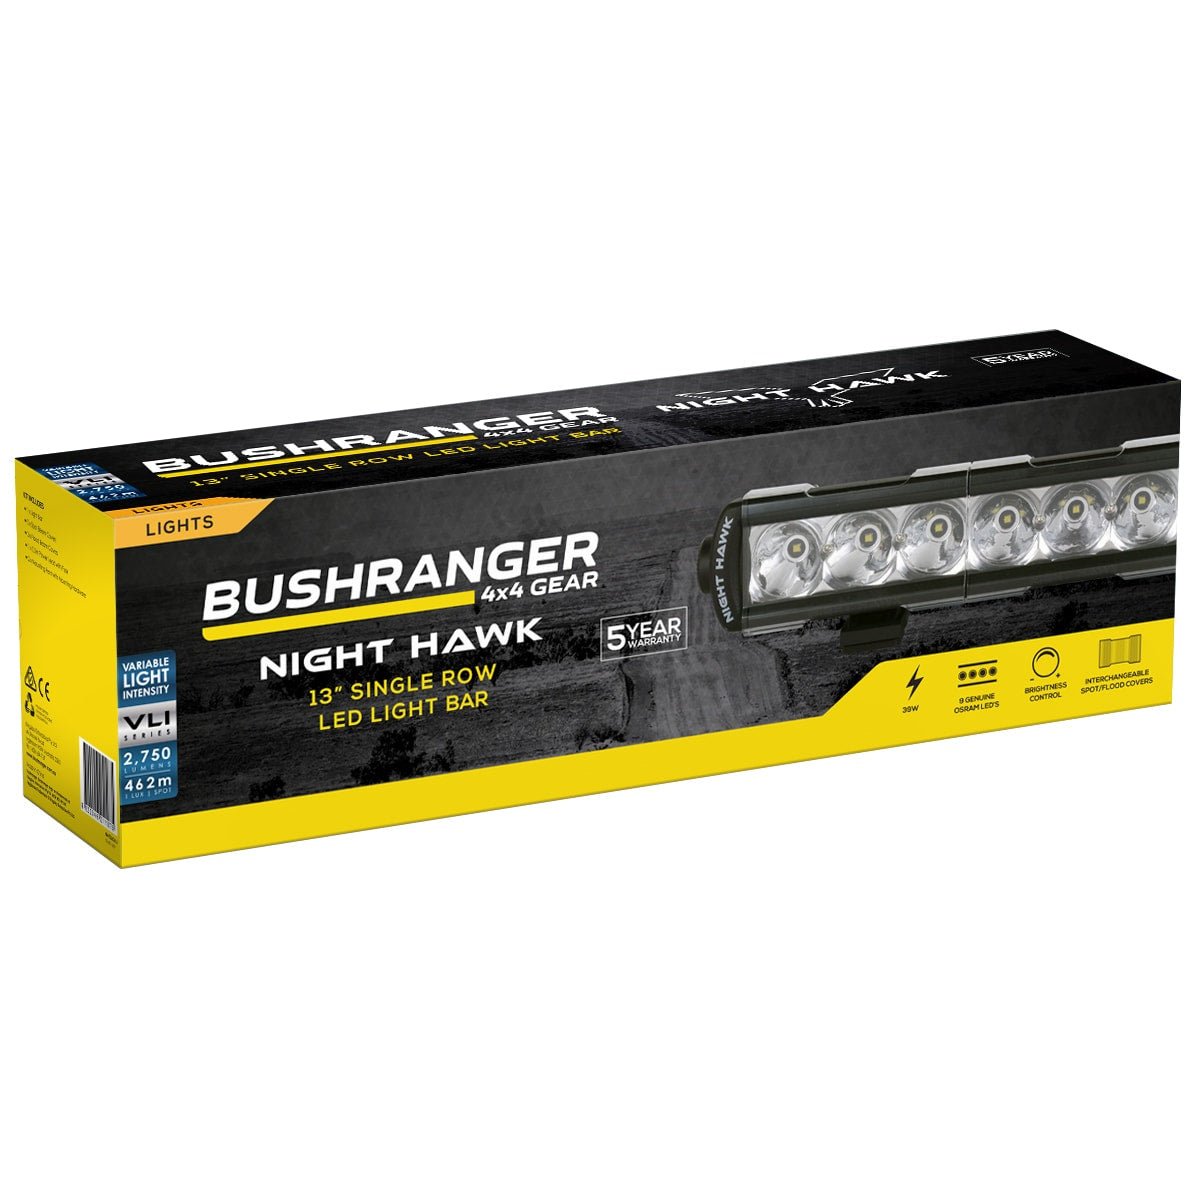 Bushranger NIGHT HAWK VLI SERIES LED LIGHT BAR 5.5" | Bushranger 4x4 | A247 Gear